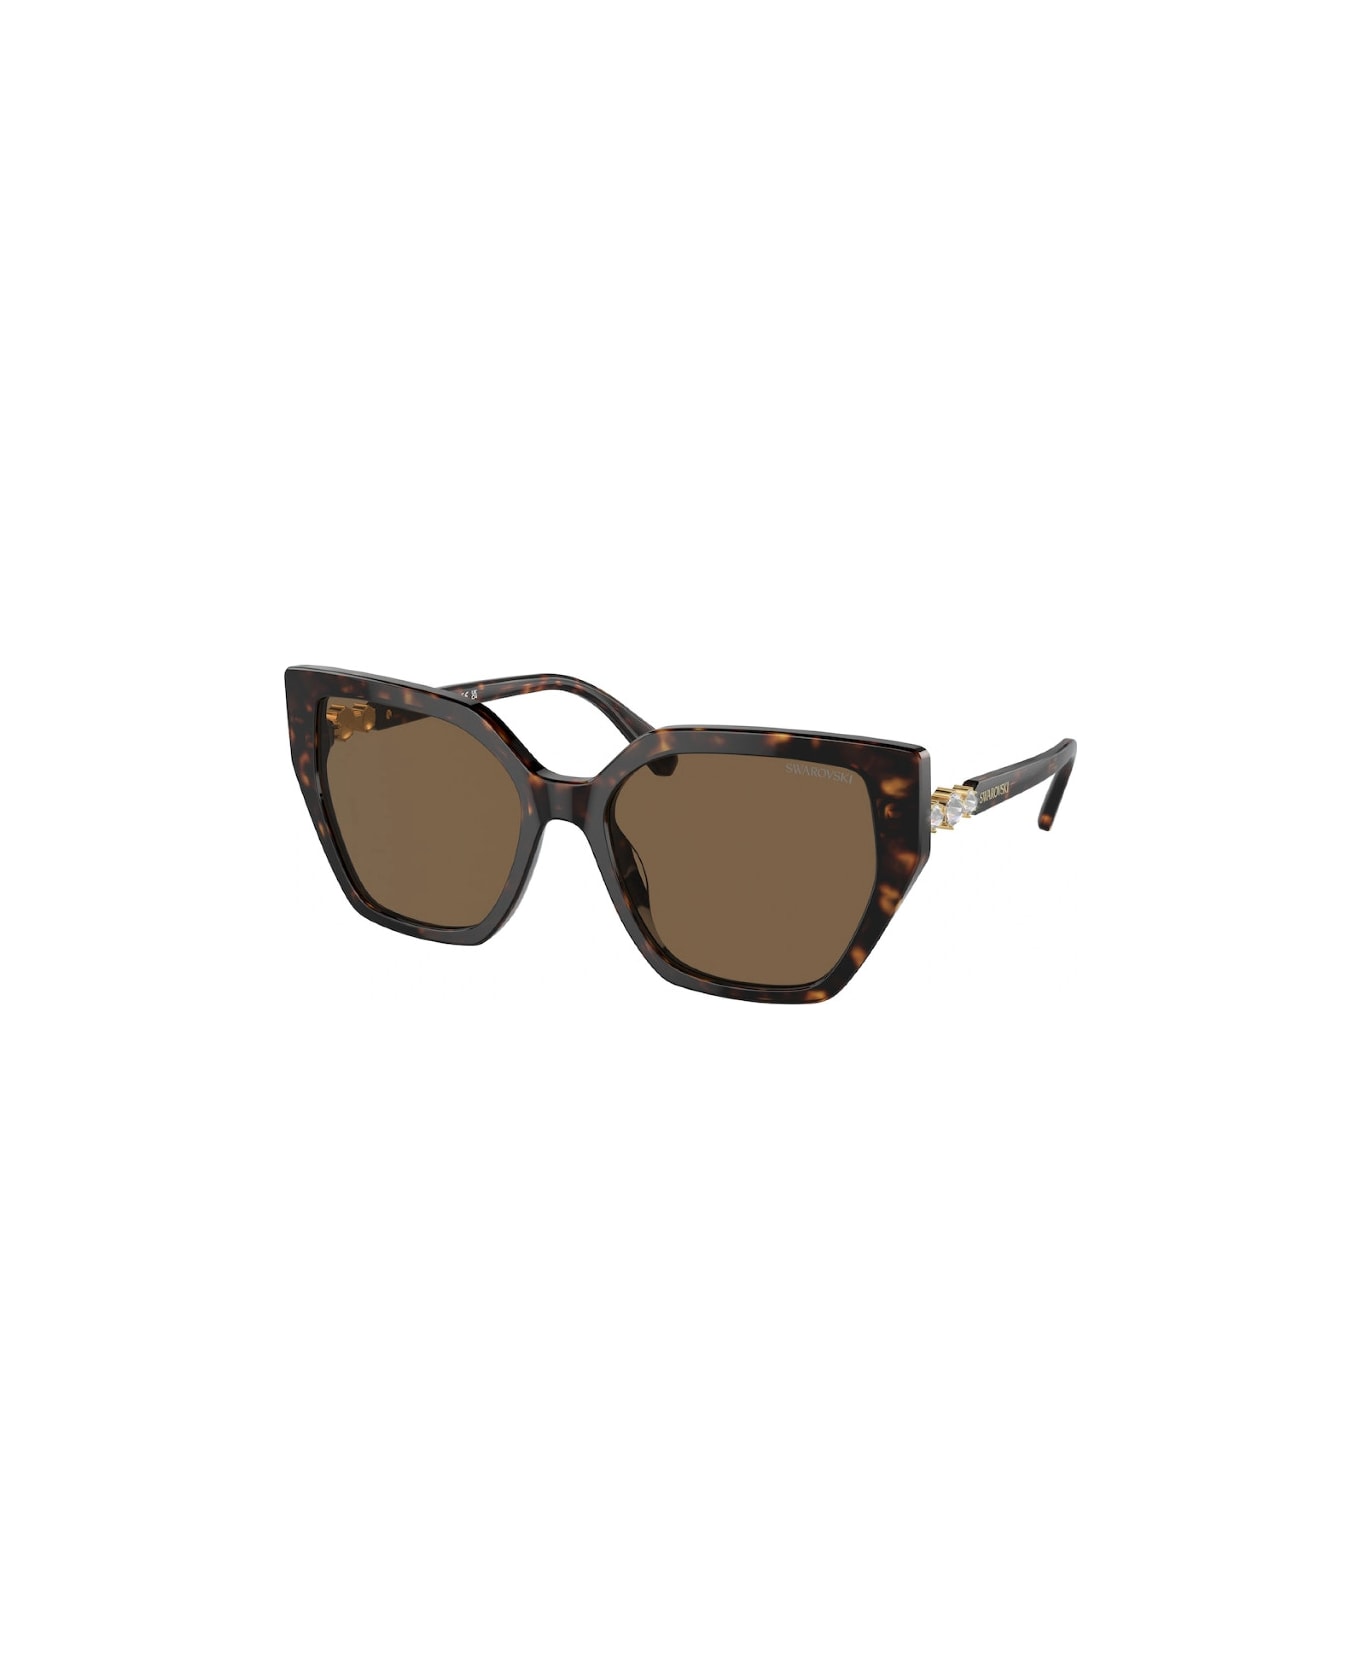 Swarovski SK6016 100273 Sunglasses - Tortoise